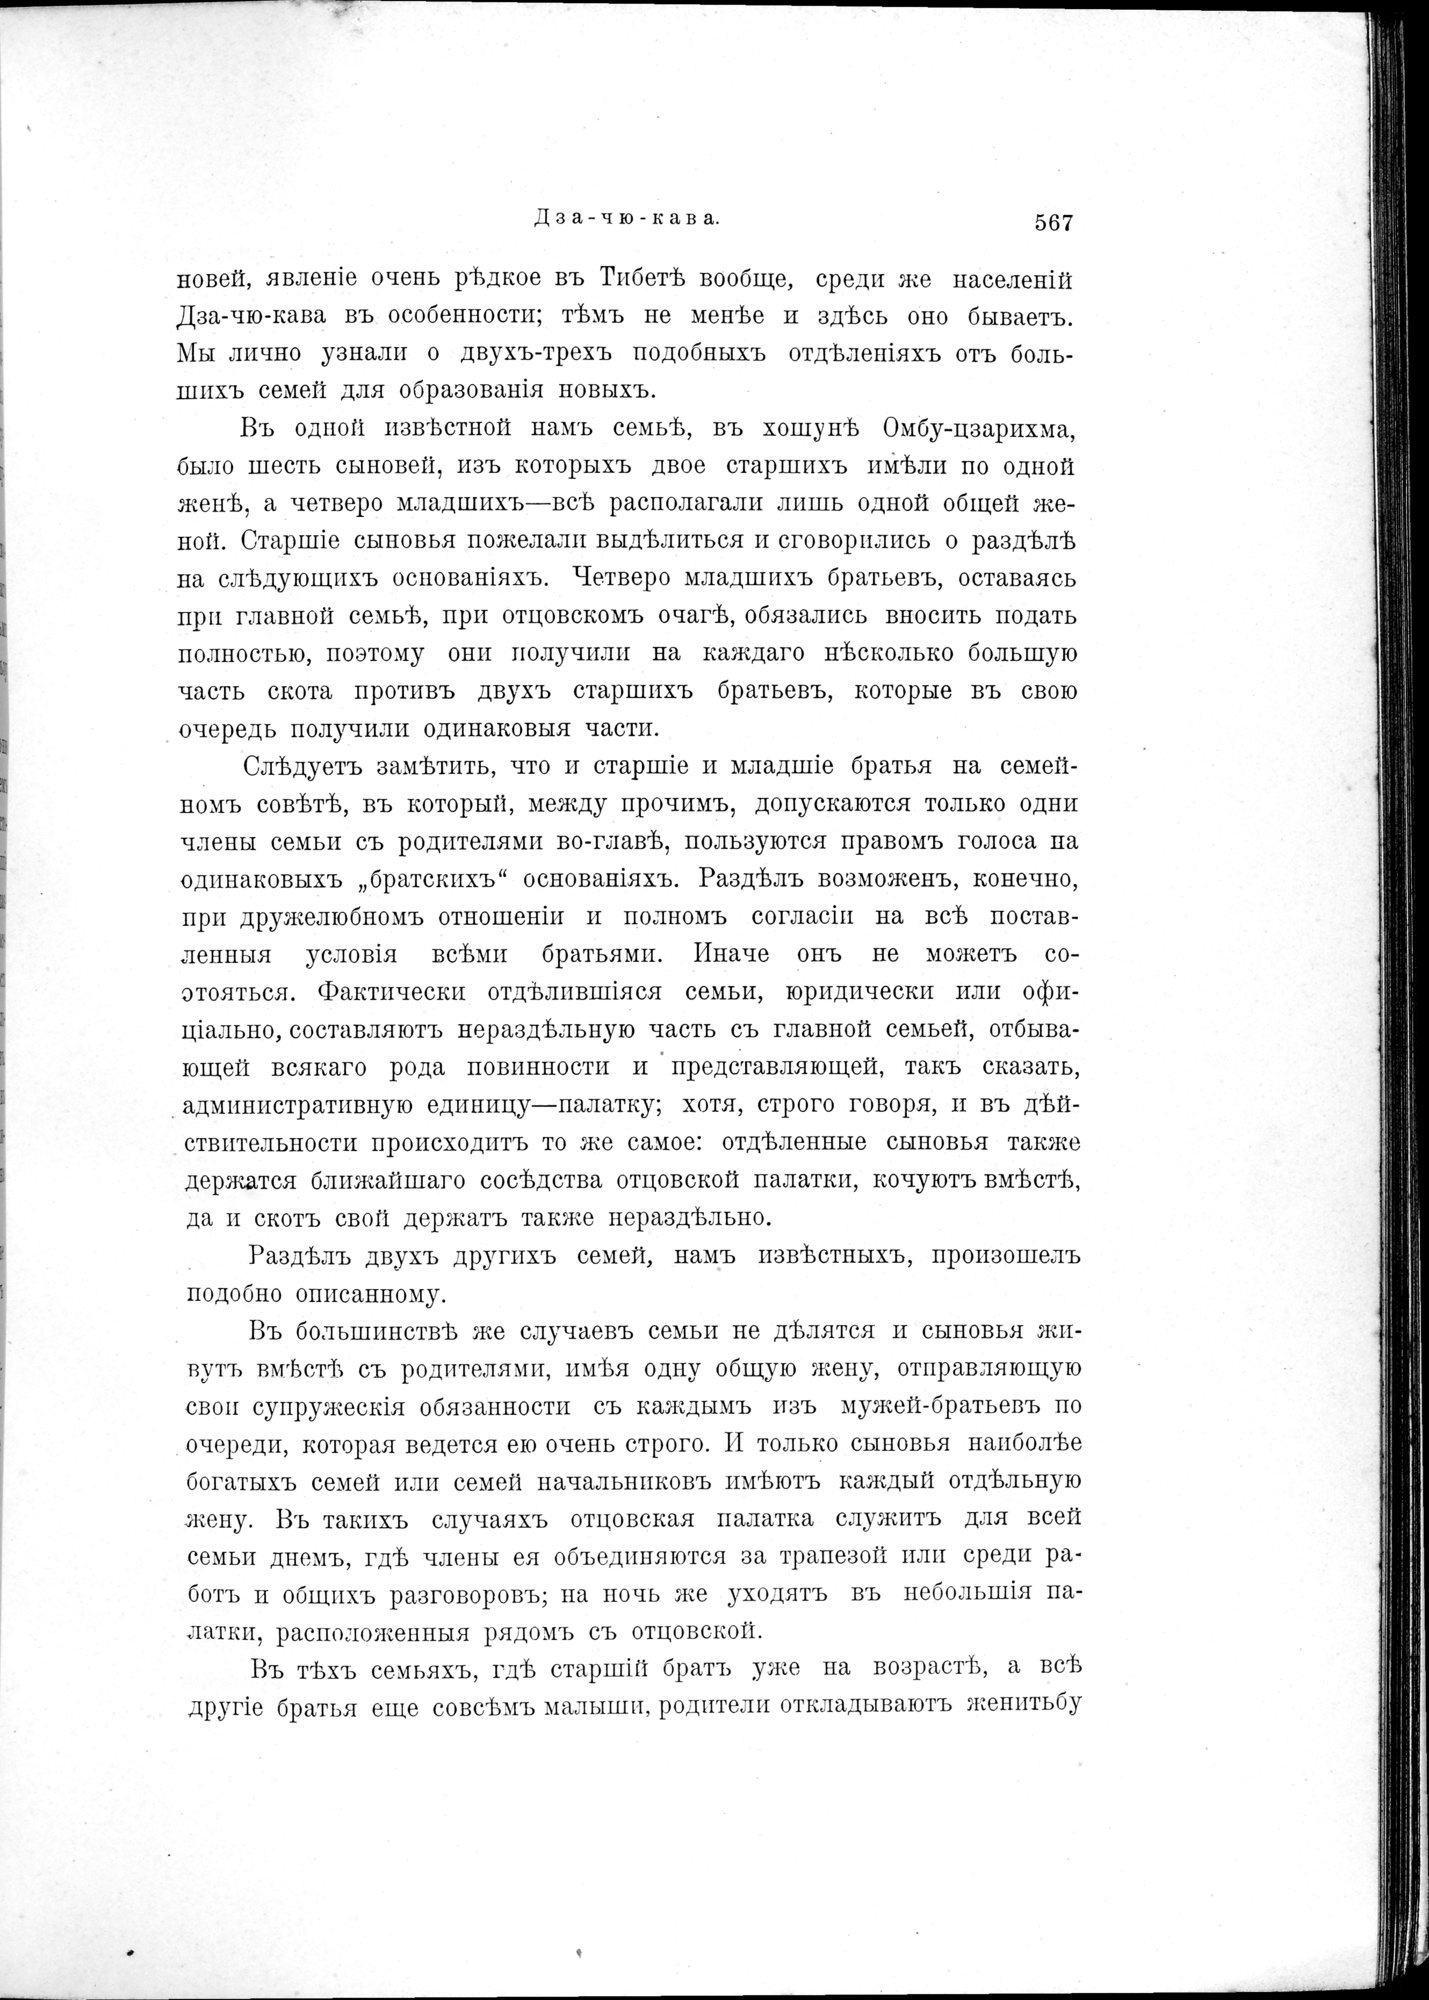 Mongoliia i Kam : vol.2 / Page 391 (Grayscale High Resolution Image)